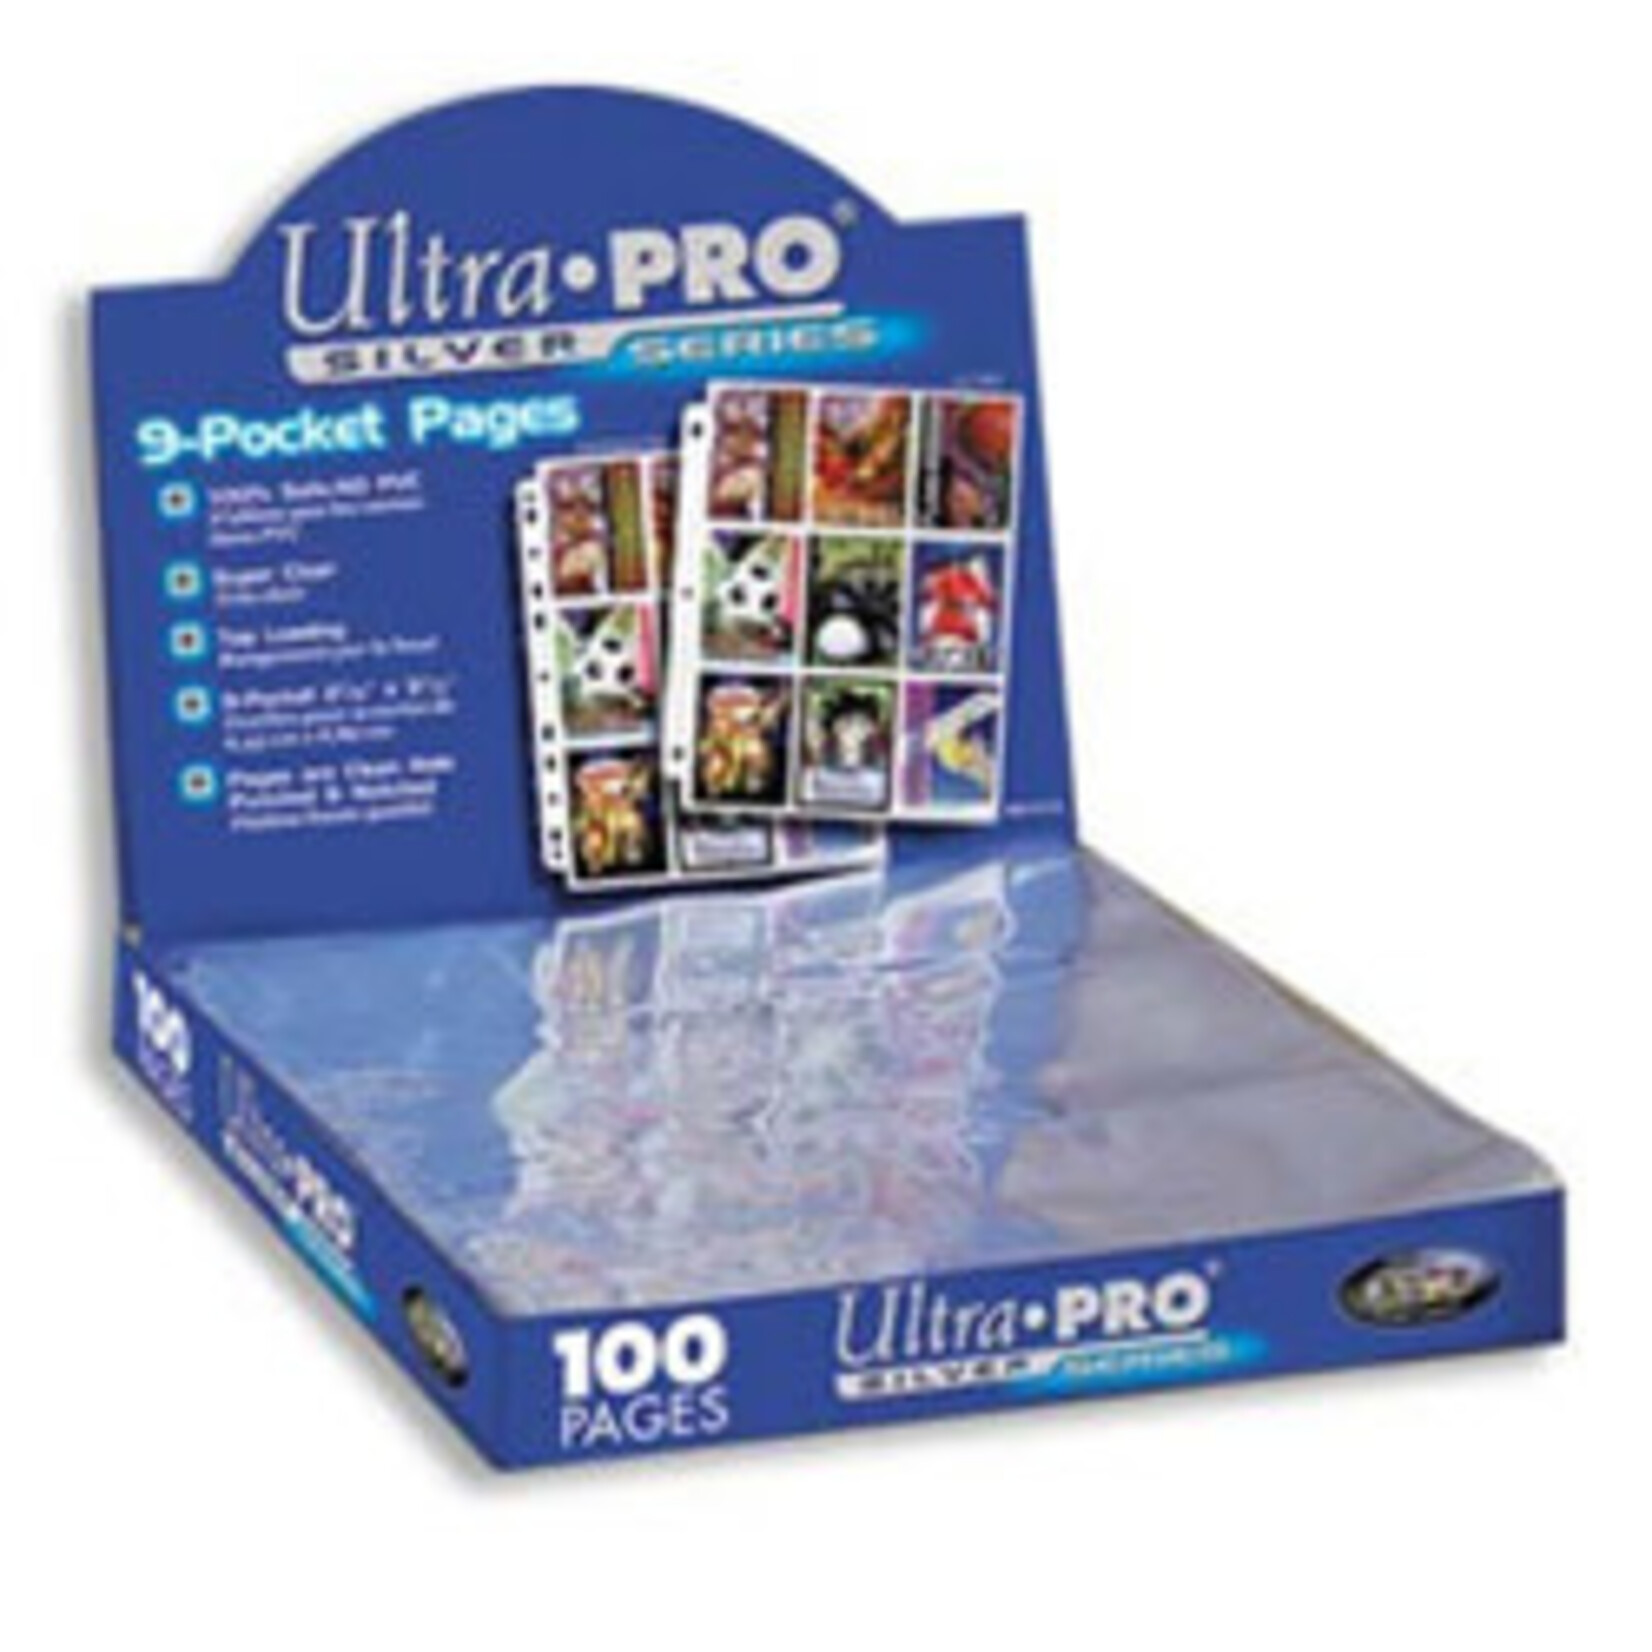 Ultra Pro ULTRA PRO: PAGES - 9-POCKET SILVER